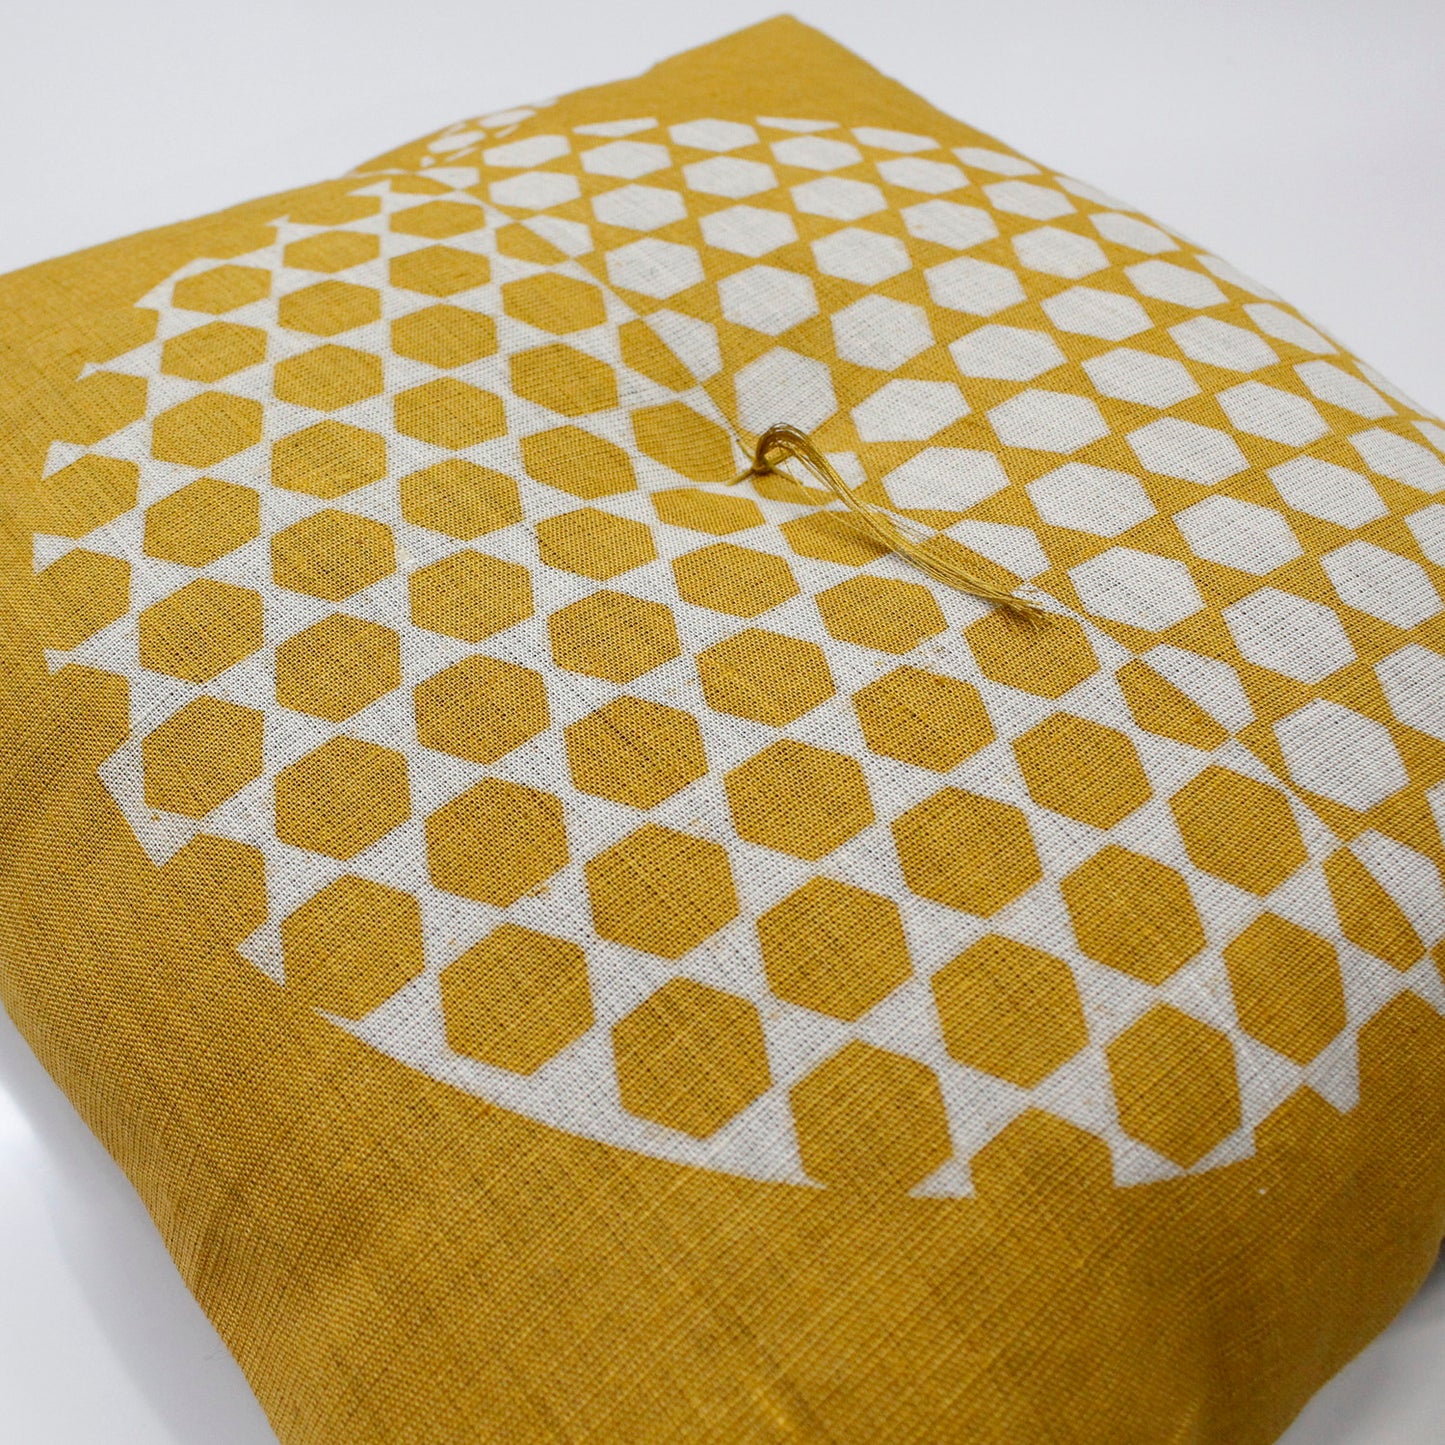 Zabuton (Japanese Cushion) / Turtle-Shell-Apple / Mustard Yellow / W42xH45cm